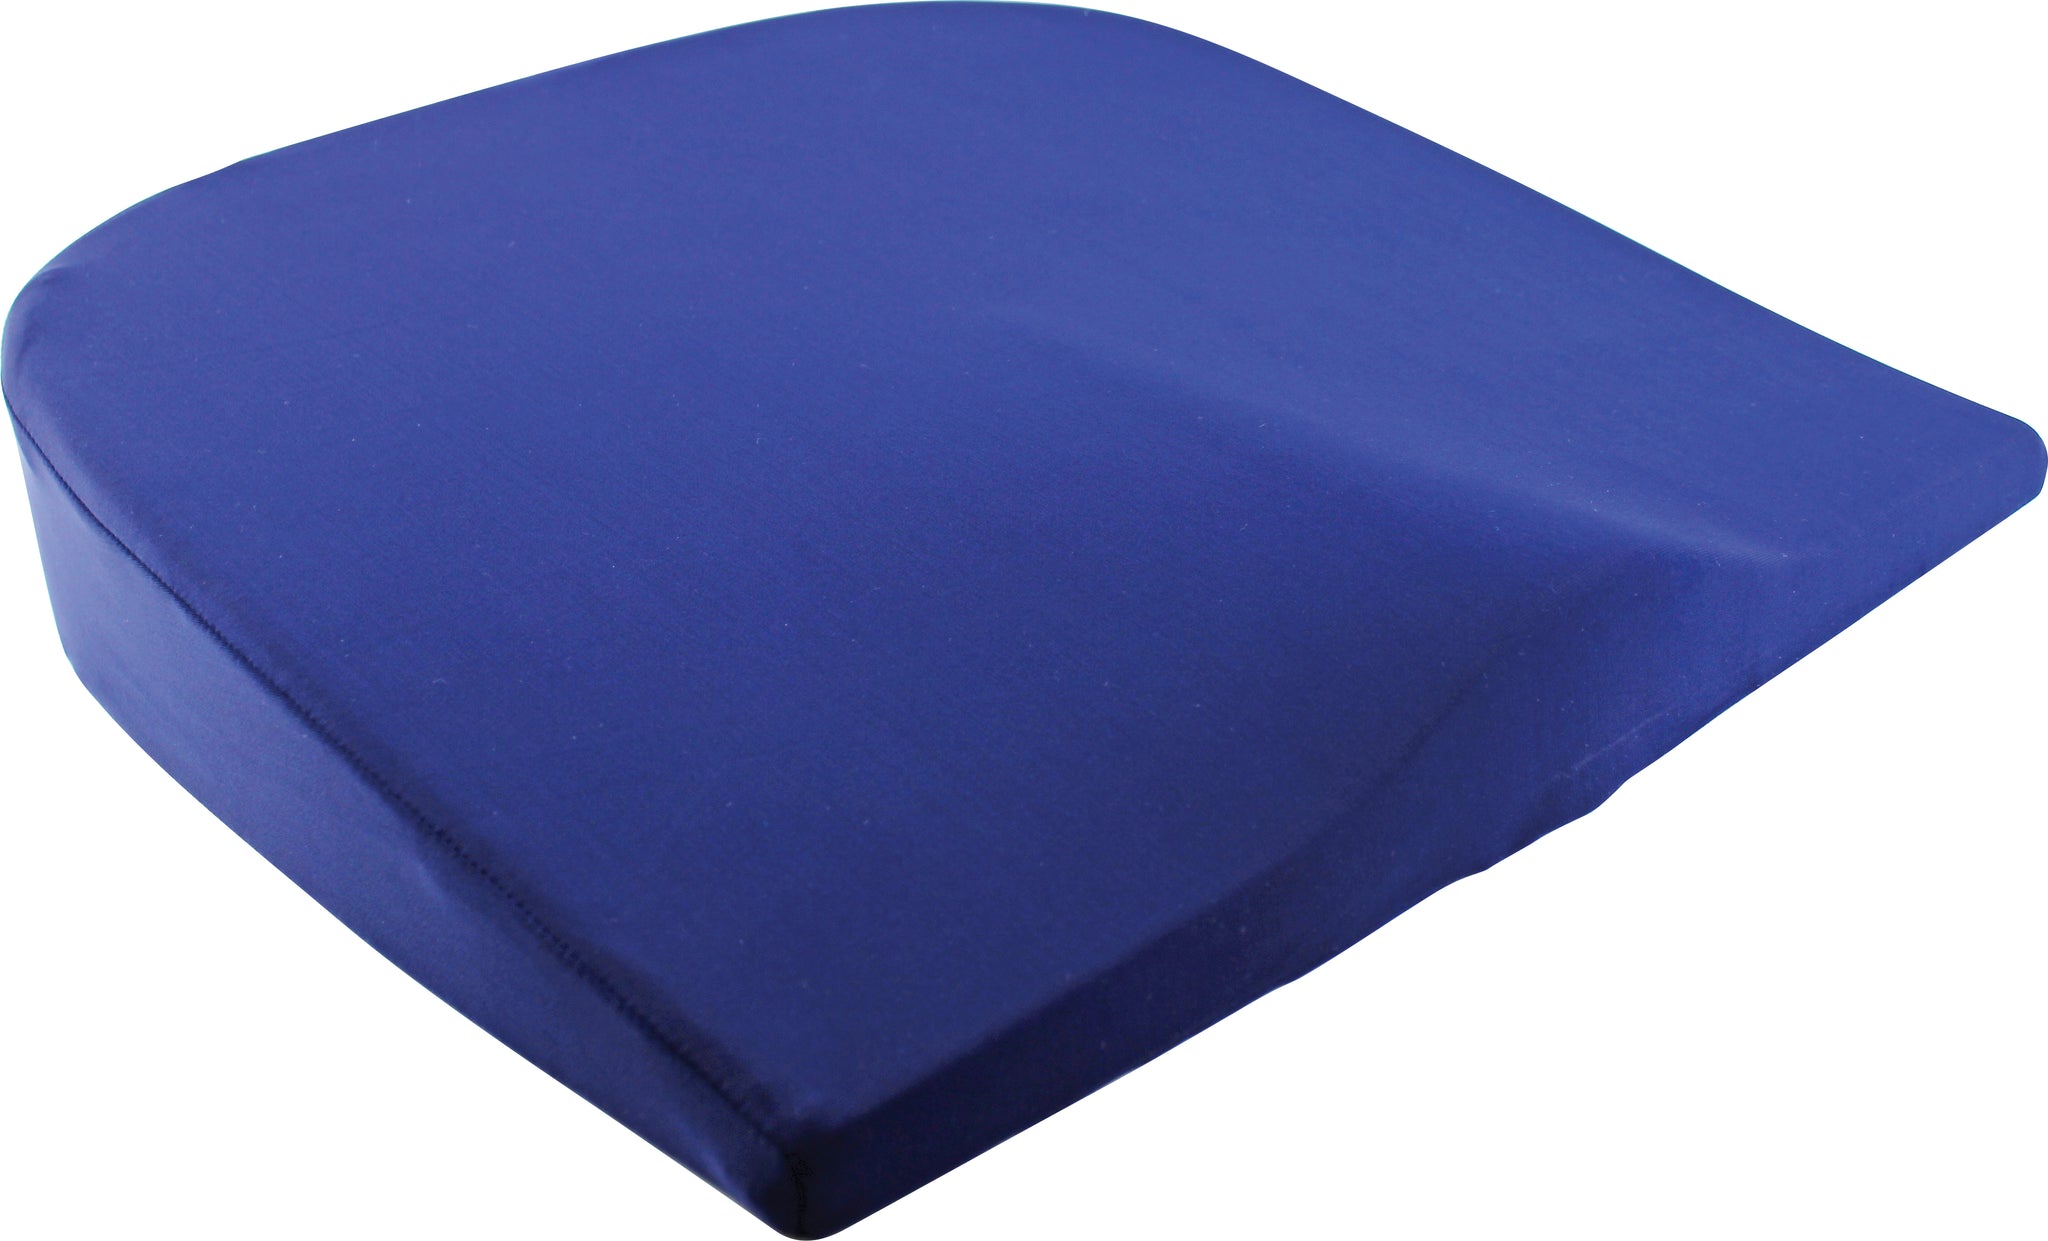 Eze Back Memory Foam Seat Cushion USJ-835 – Daiwa Felicity Online Store